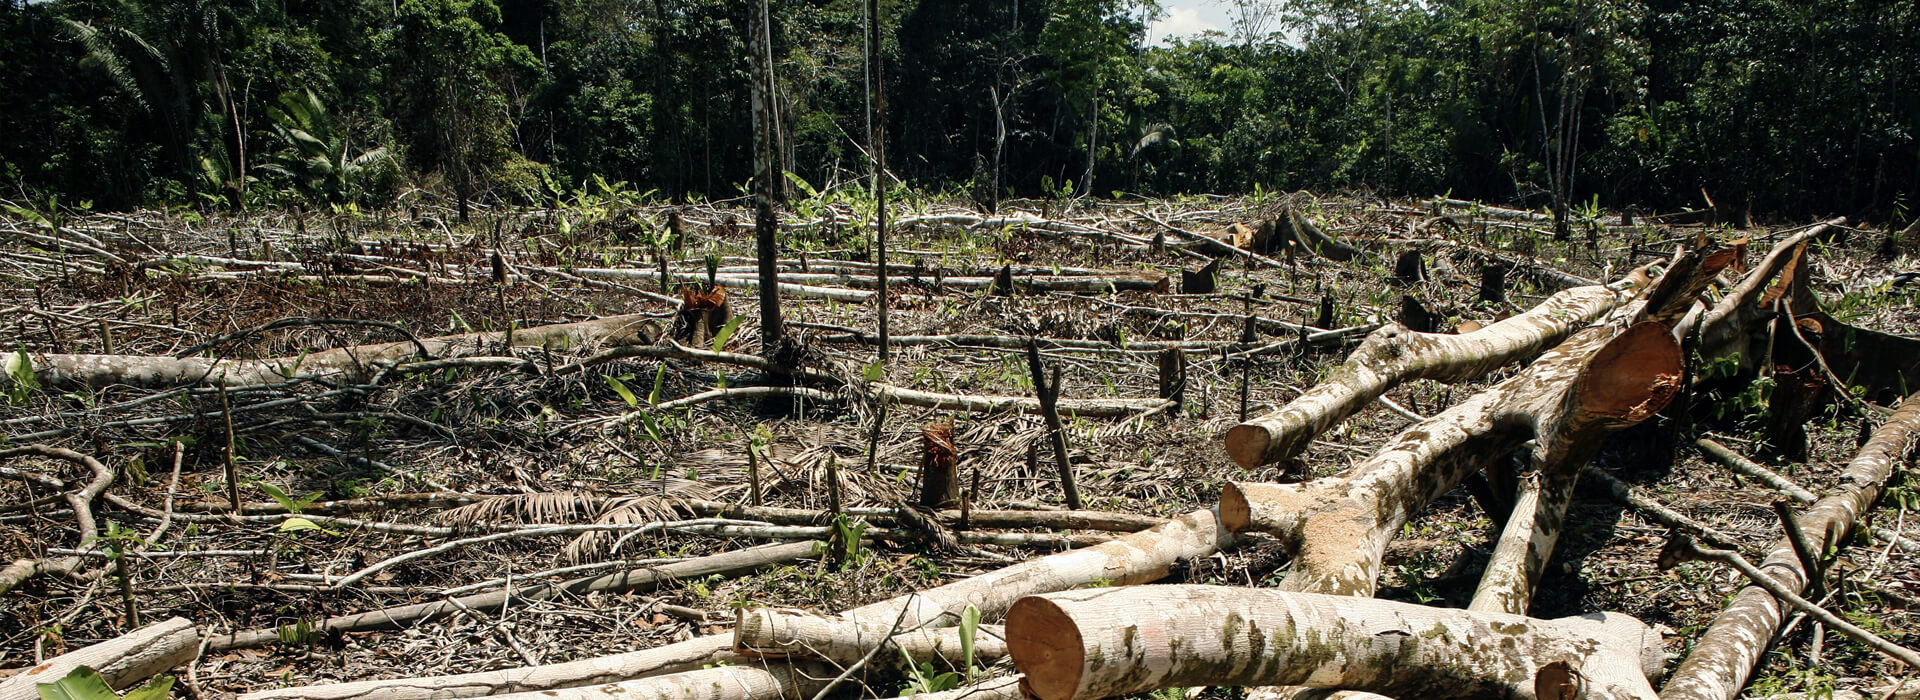 Deforestation in Peru, Dr Morley Read/Shutterstock